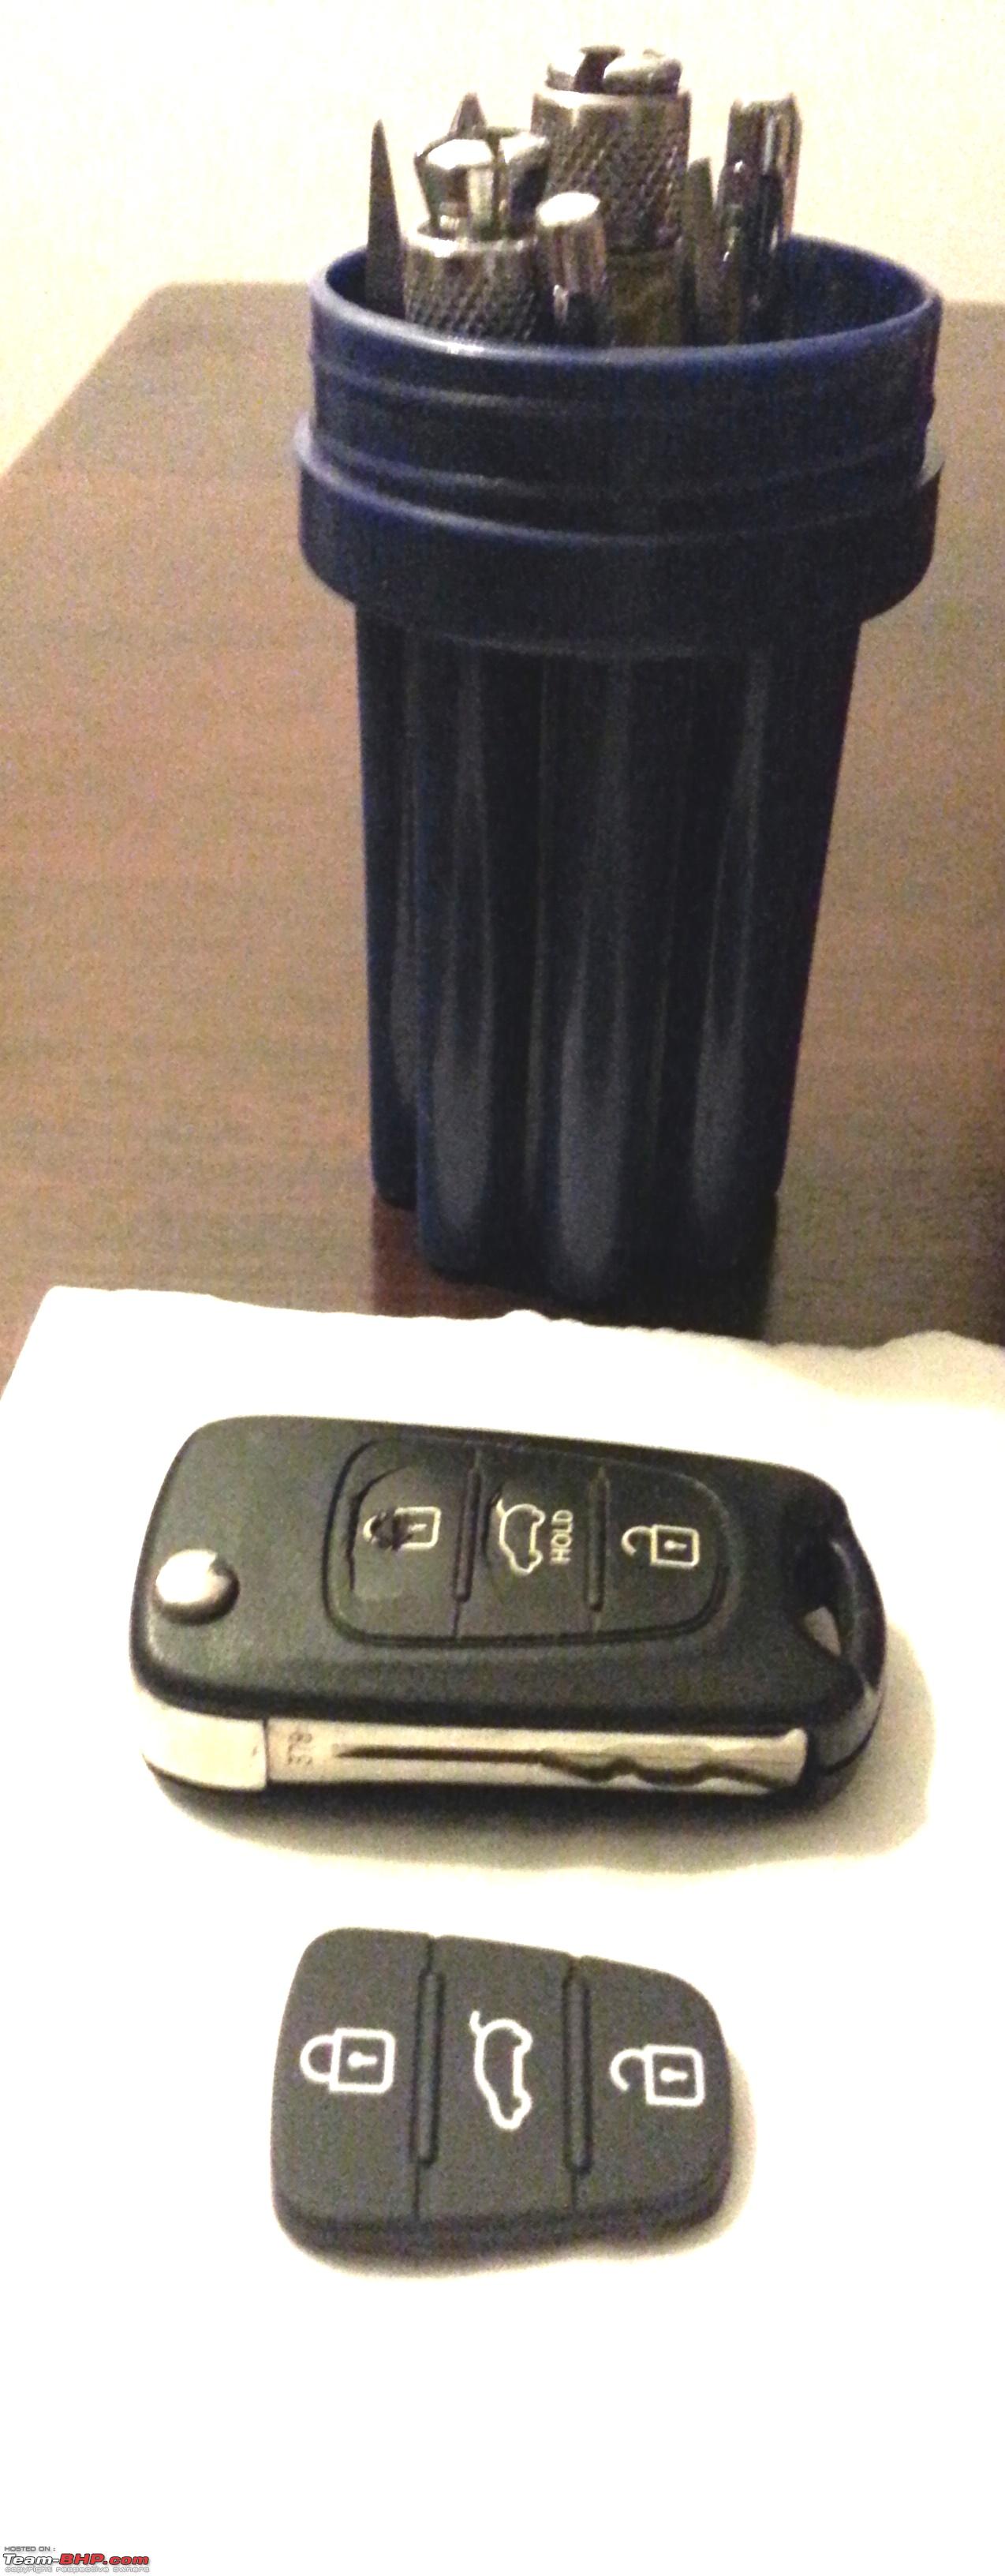 Hyundai Remote Key - Battery Replacement 